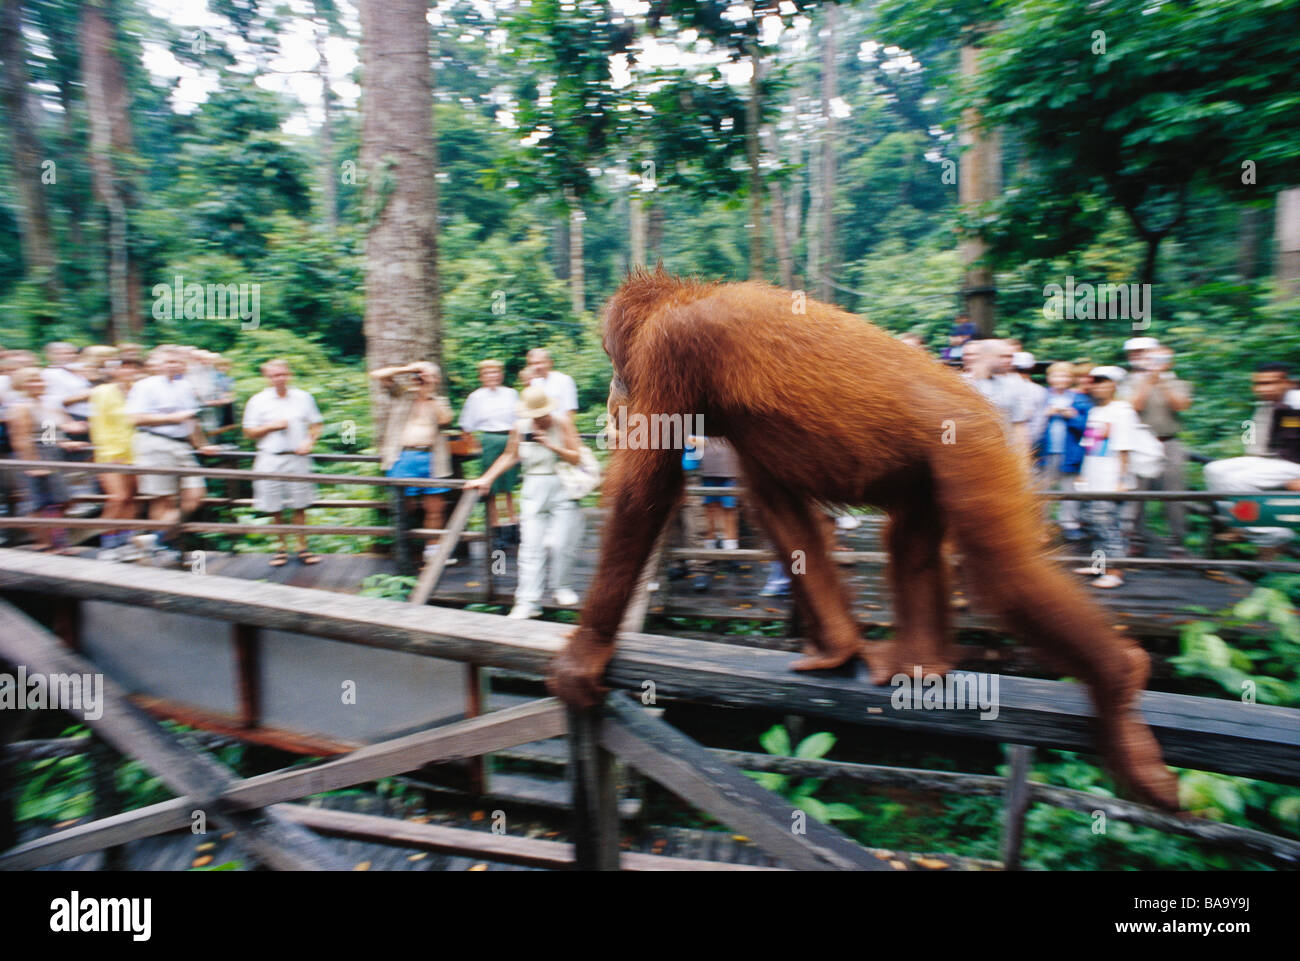 Orangutan Borneo Malaysia Stock Photo